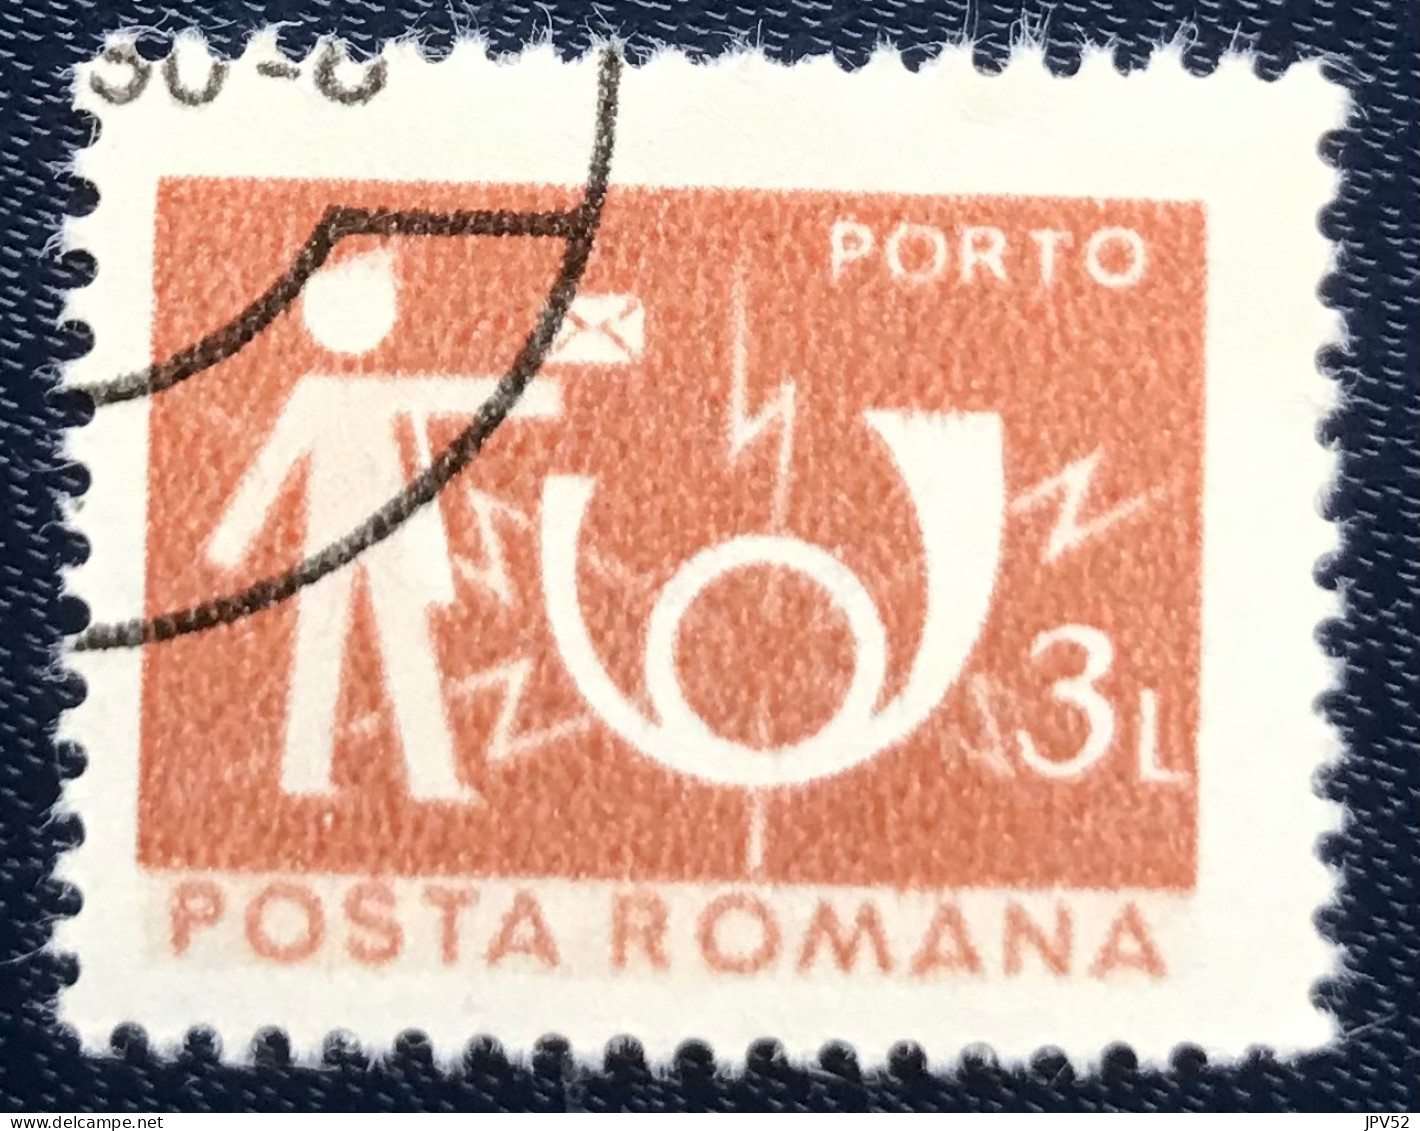 Romana - Roemenië - C14/53 - 1982 - (°)used - Michel 129 - Postbode & Posthoorn - Portomarken